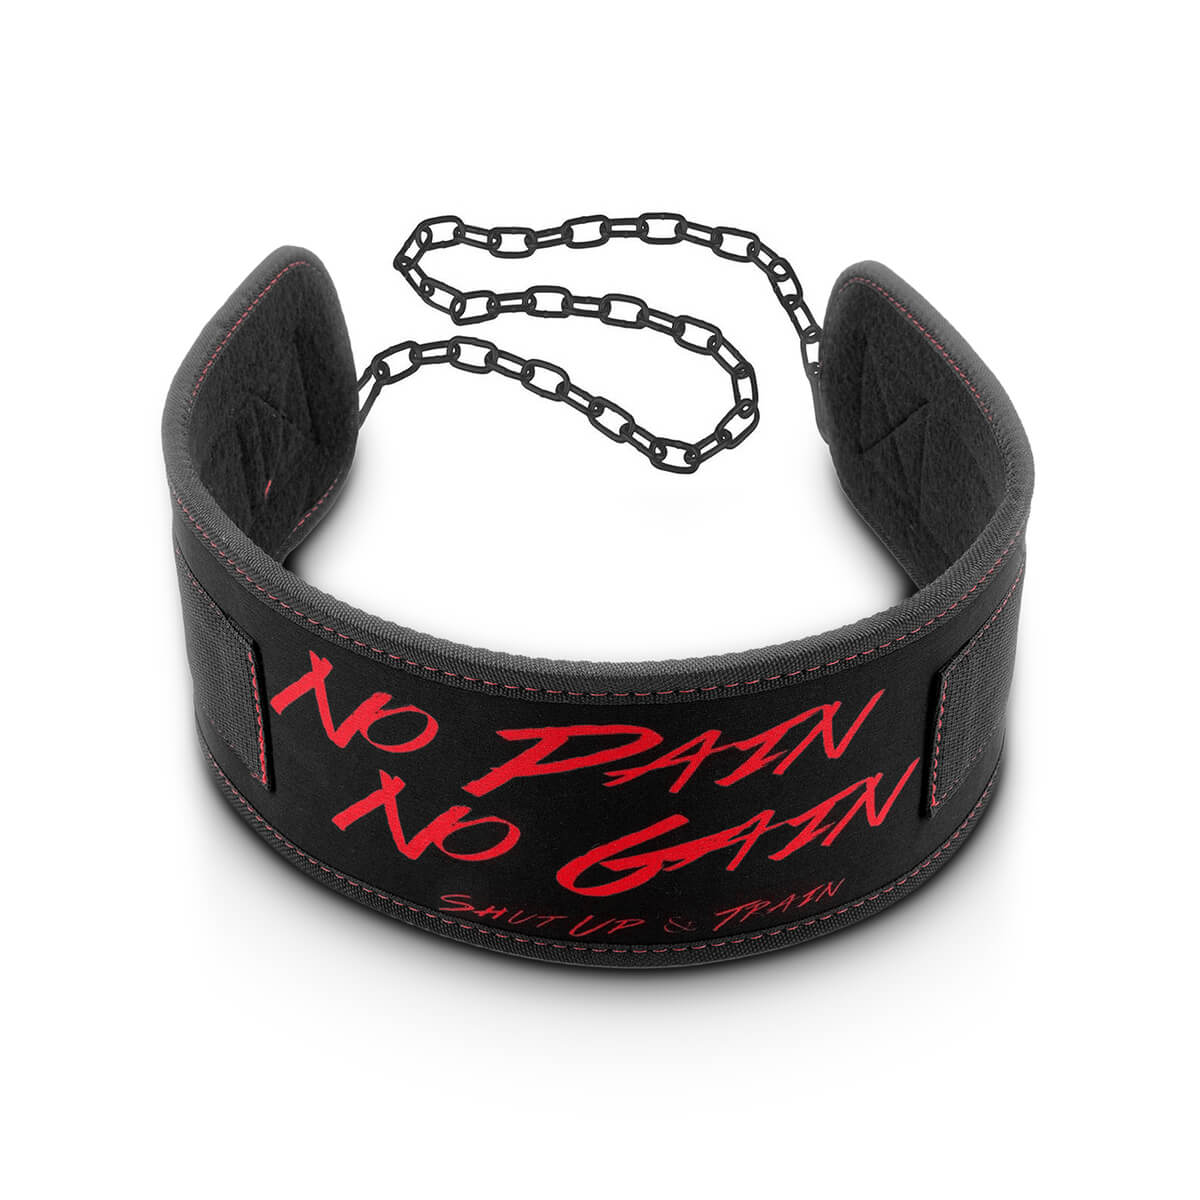 Dip Belt, No Pain No Gain, black/red, C.P. Sports